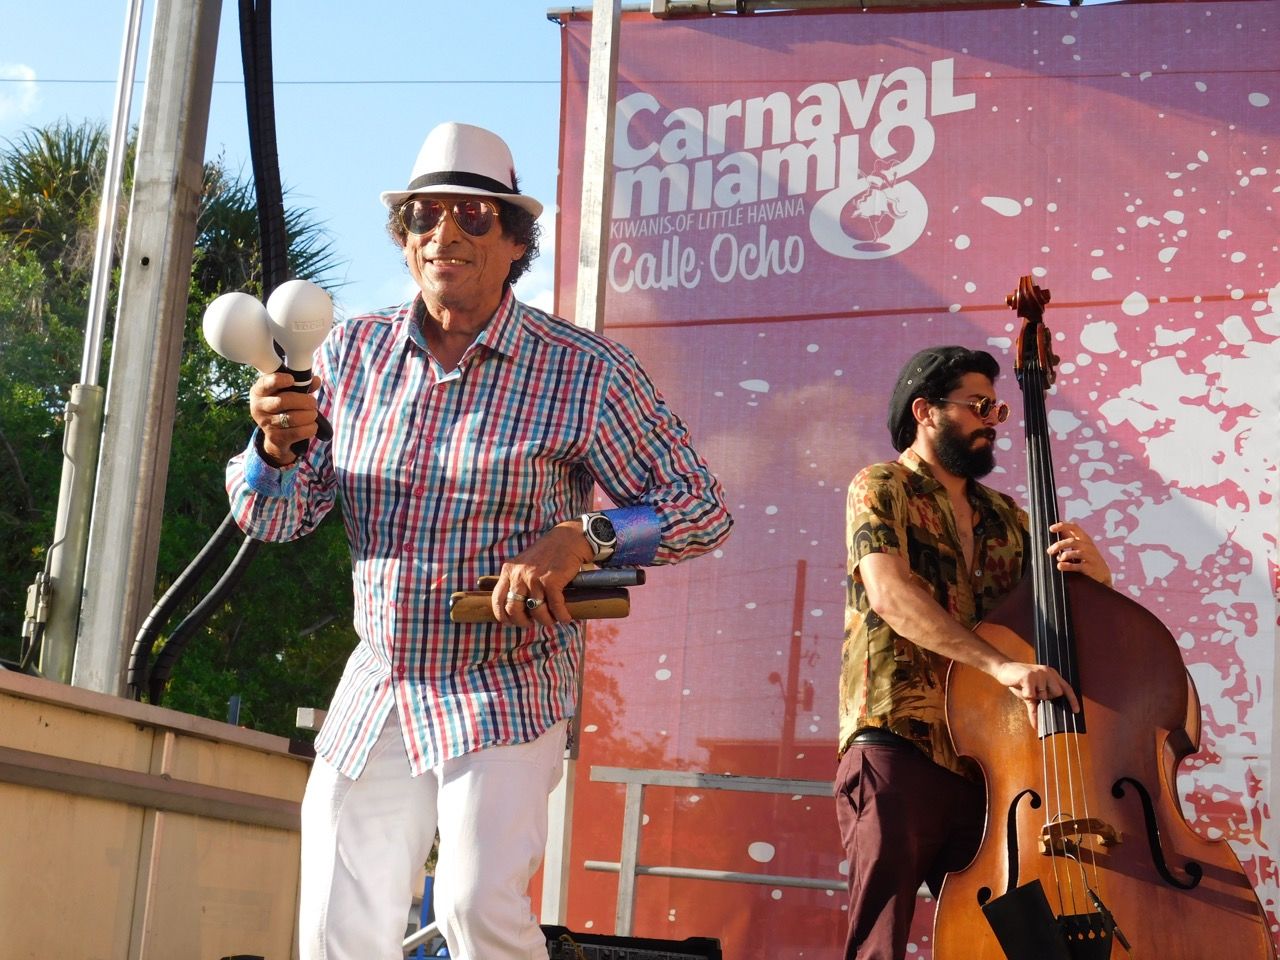 Groupe cubain durant le Carnaval Miami